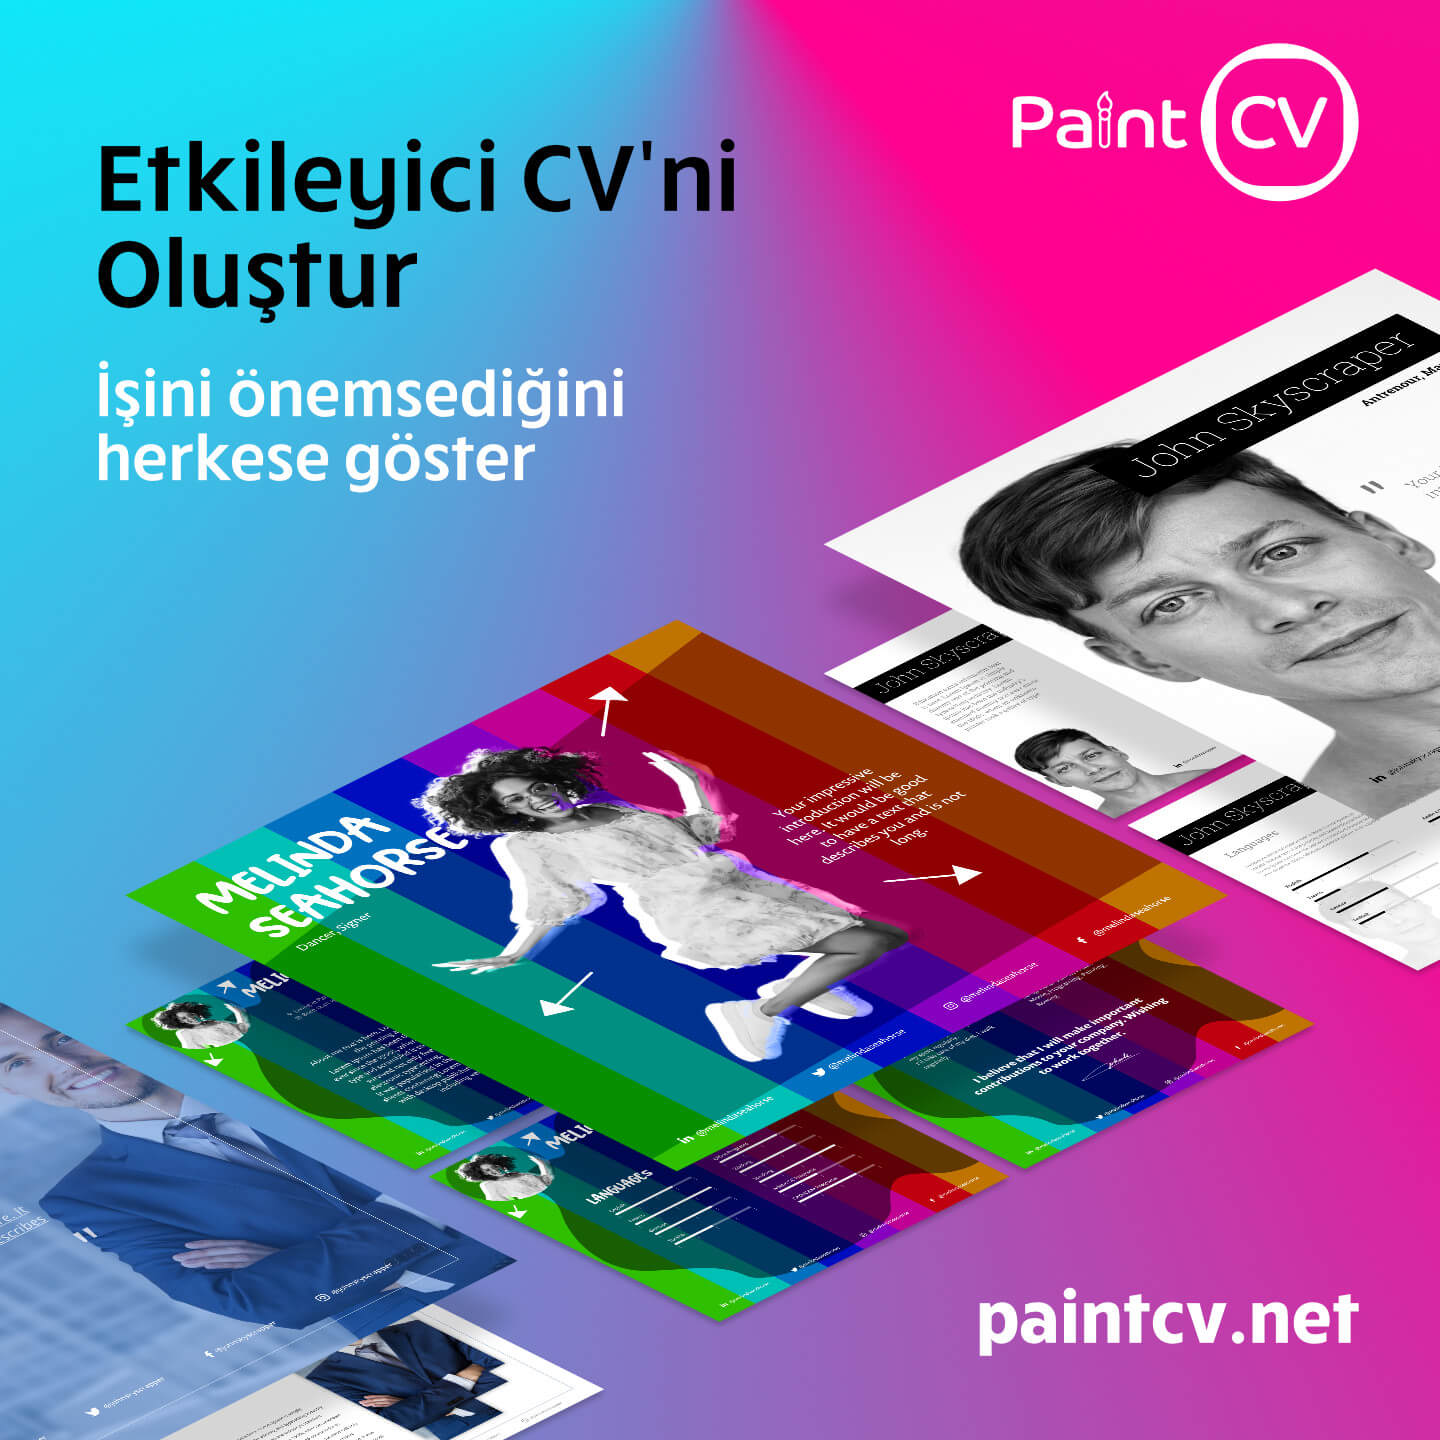 PaintCV.net